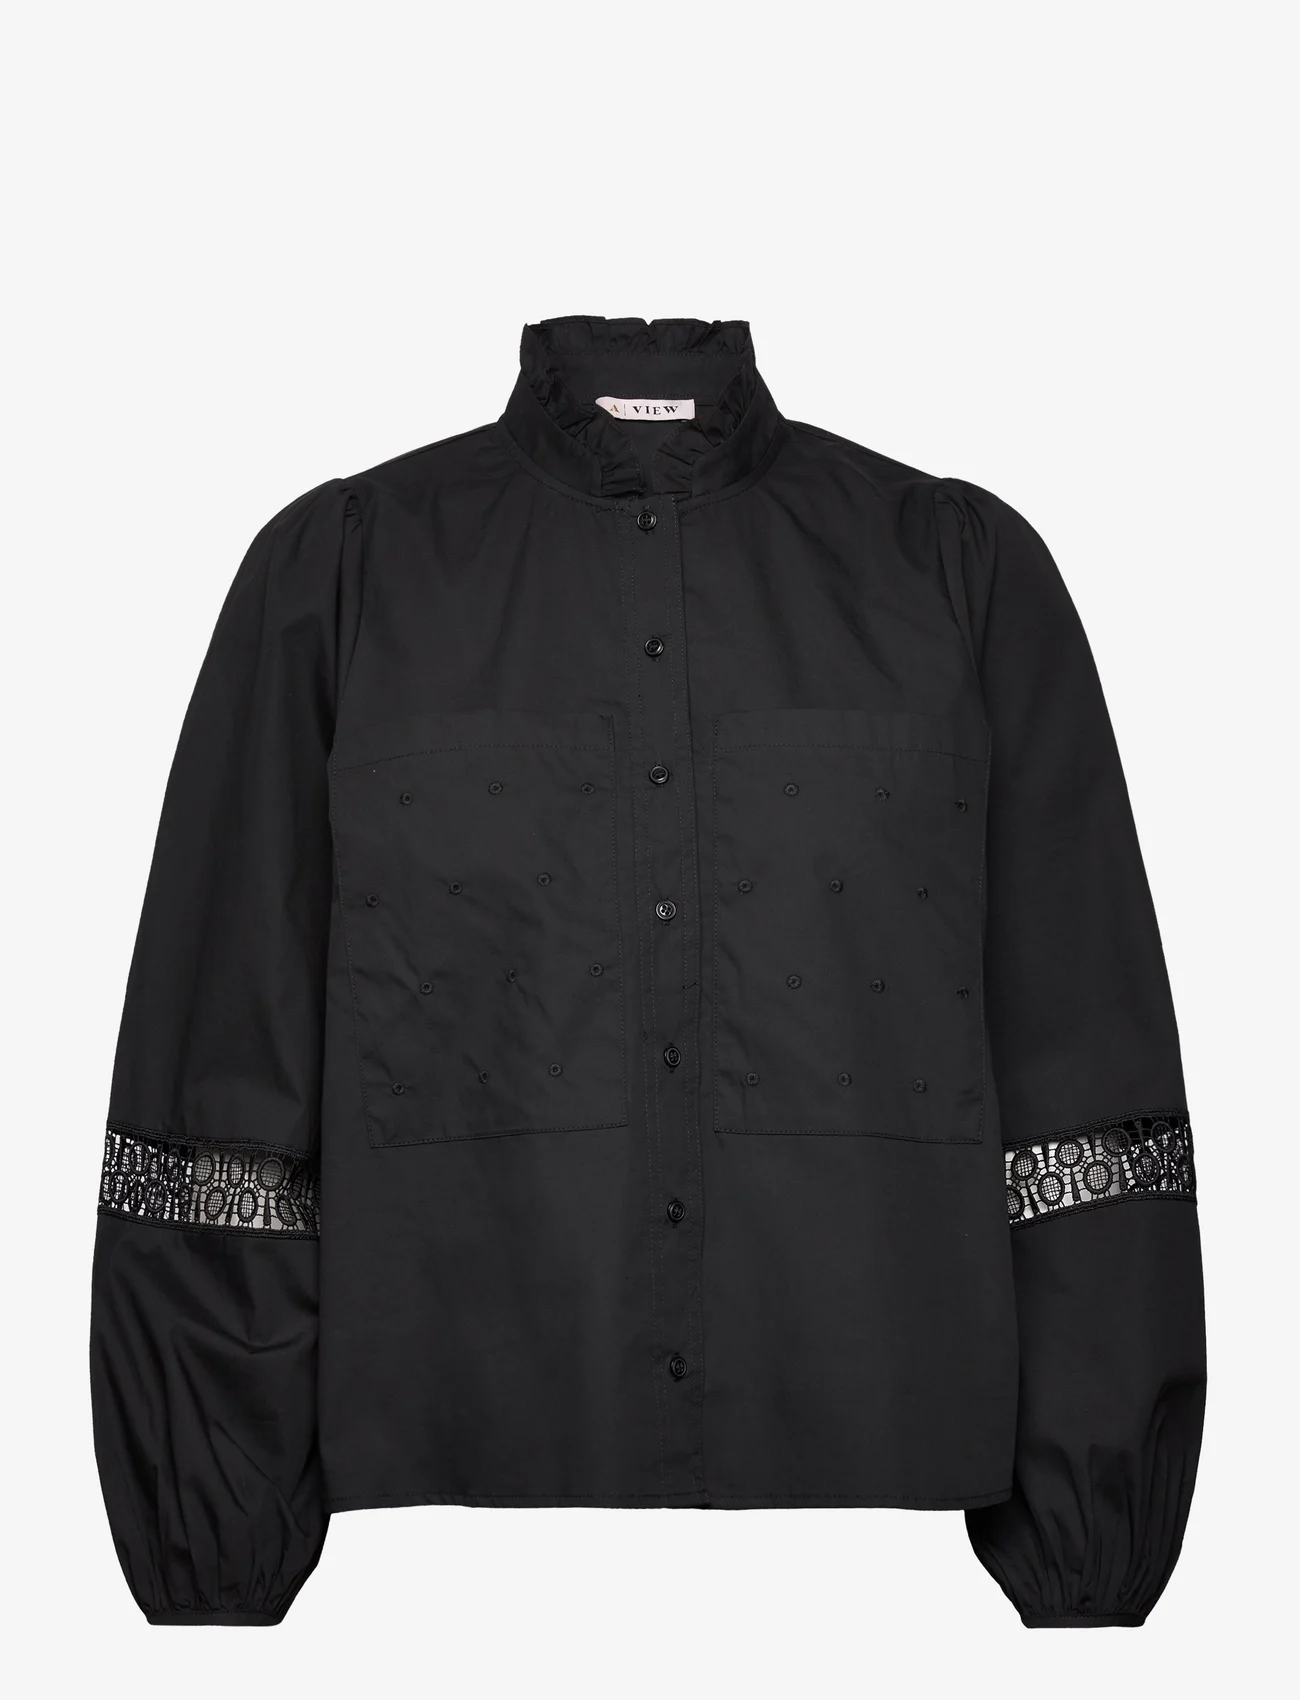 A-View - Tiffany shirt - langärmlige hemden - black - 0